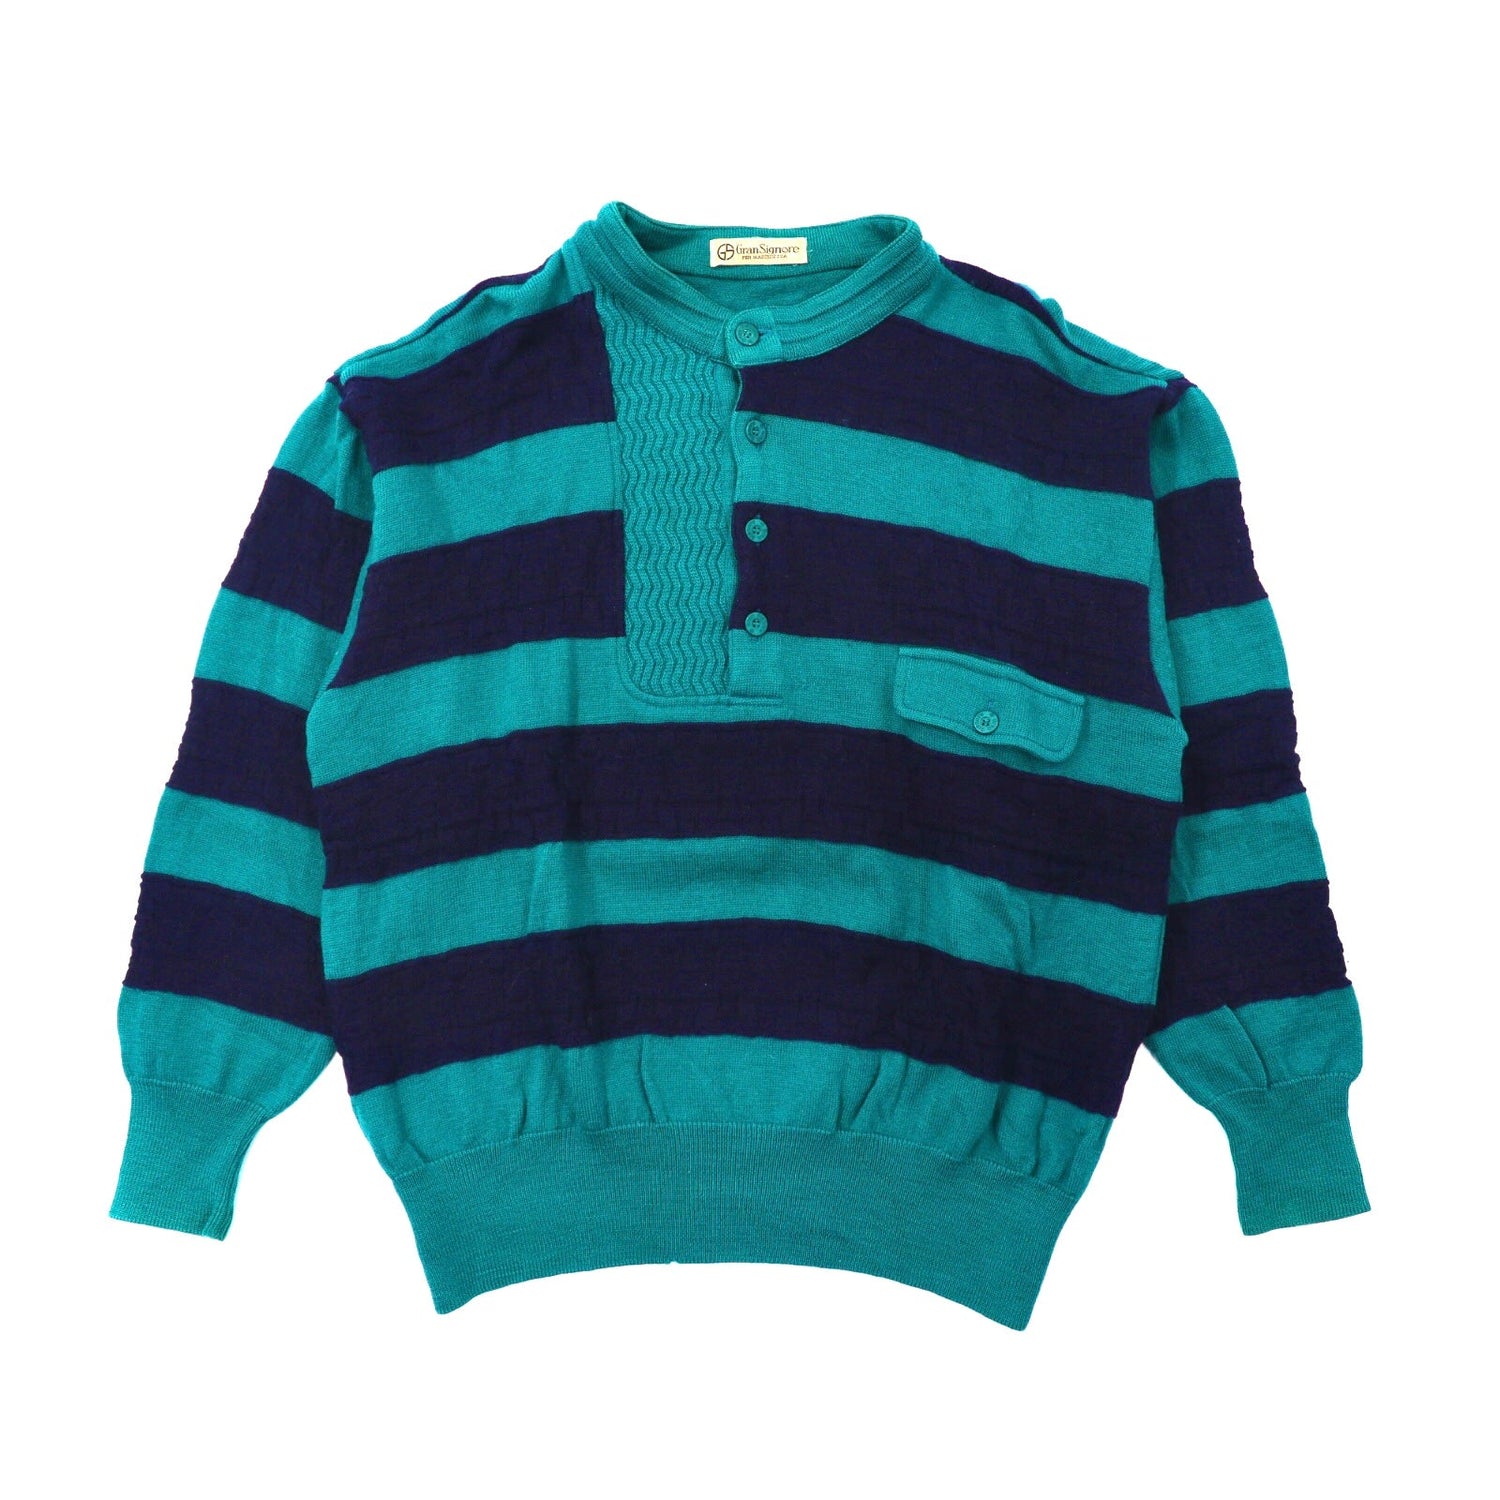 GRAN SIGNORE Henry Neck Knit Sweater L Green Striped Wool Japan 